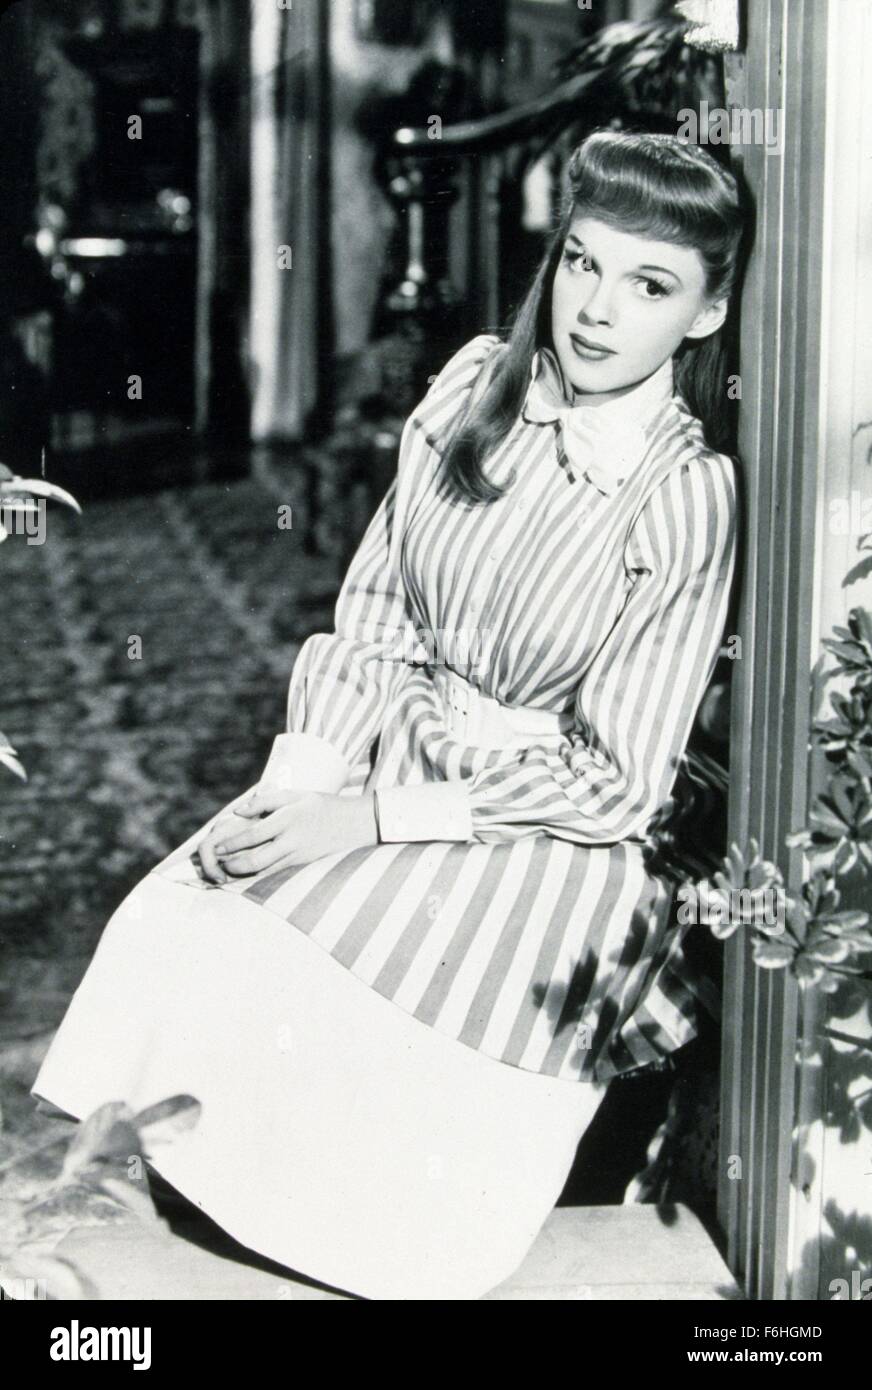 Filmtitel 1944: MEET ME IN ST. LOUIS, Regie: VINCENTE MINNELLI, Studio: MGM, abgebildet: JUDY GARLAND. (Bild Kredit: SNAP) Stockfoto